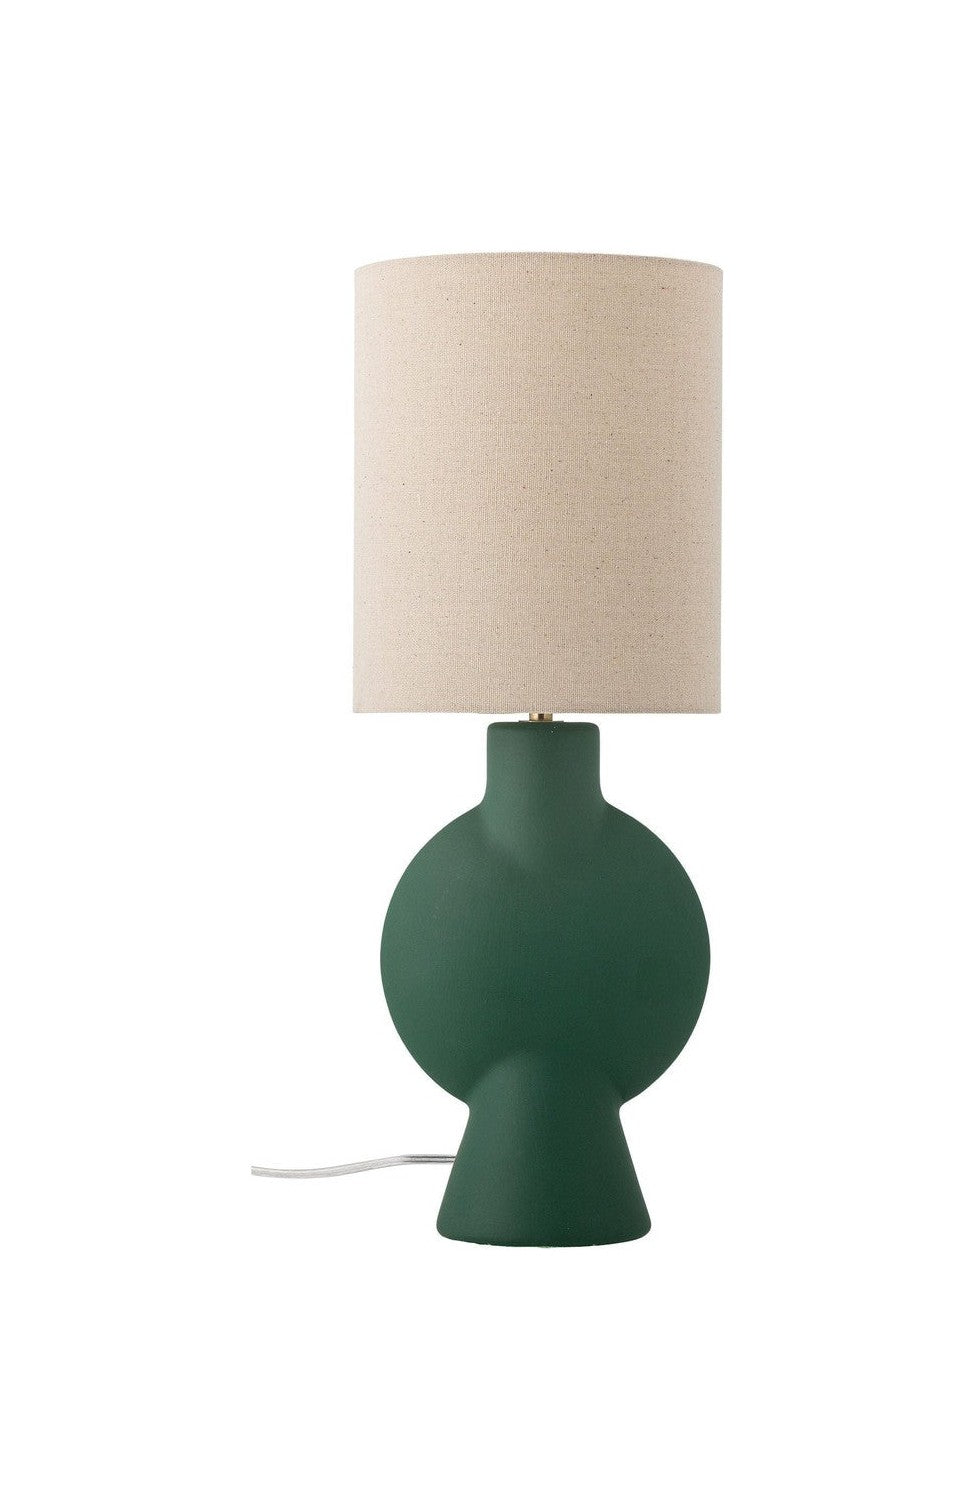 Bloomingville Sergio Tabela Lamp, verde, grés